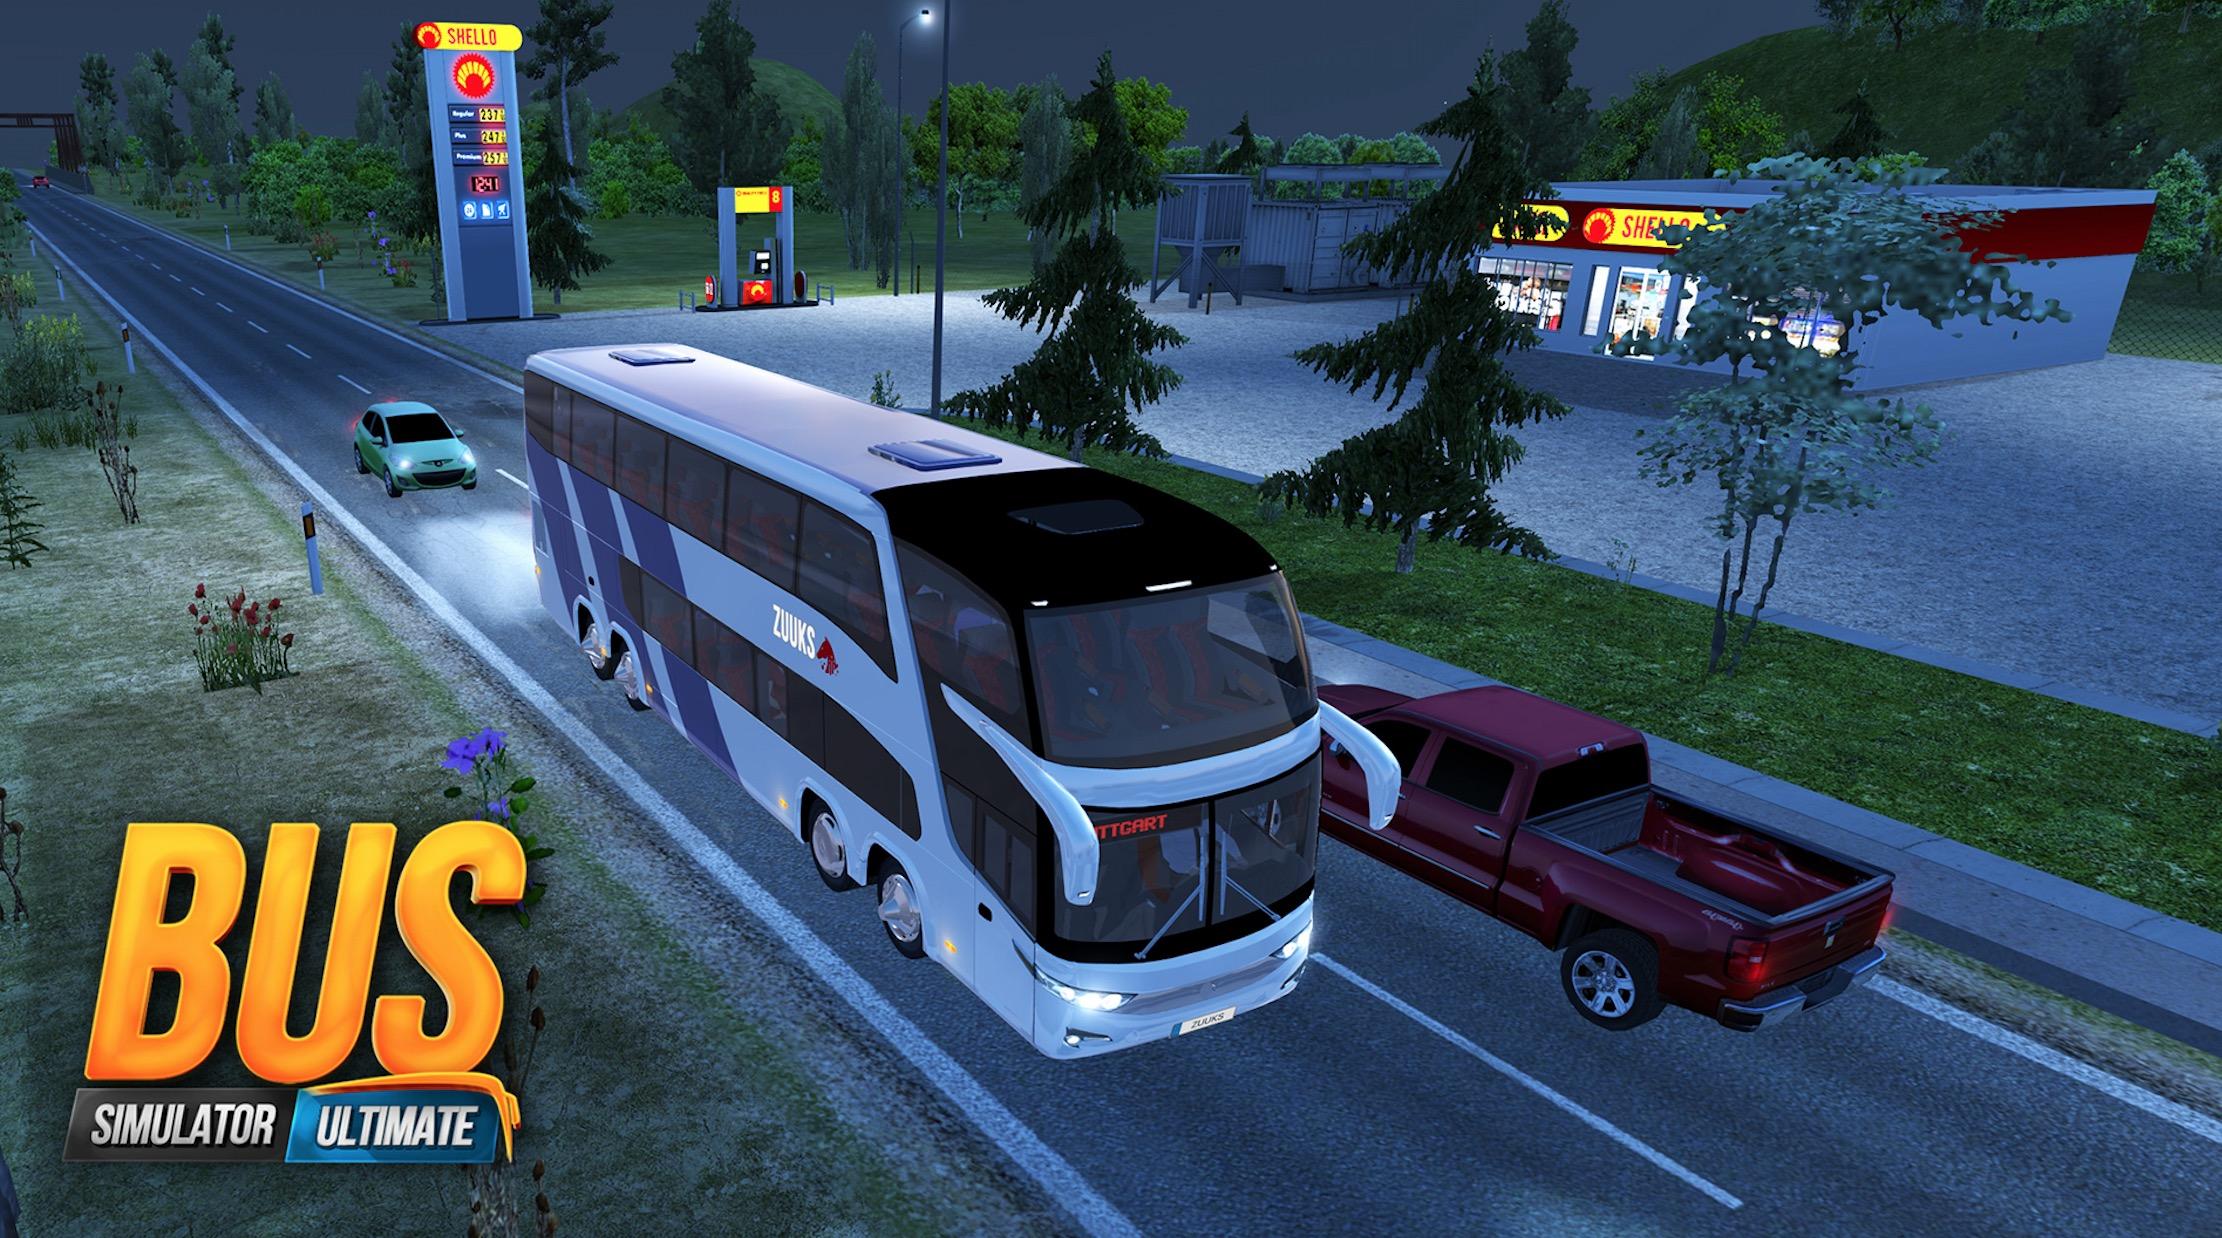 Бус симулятор автобусы. Симулятор автобуса Ultimate. Игра автобус ультимейт. Бус симулятор ультимейт. Bus Simulator Ultimate автобусы.